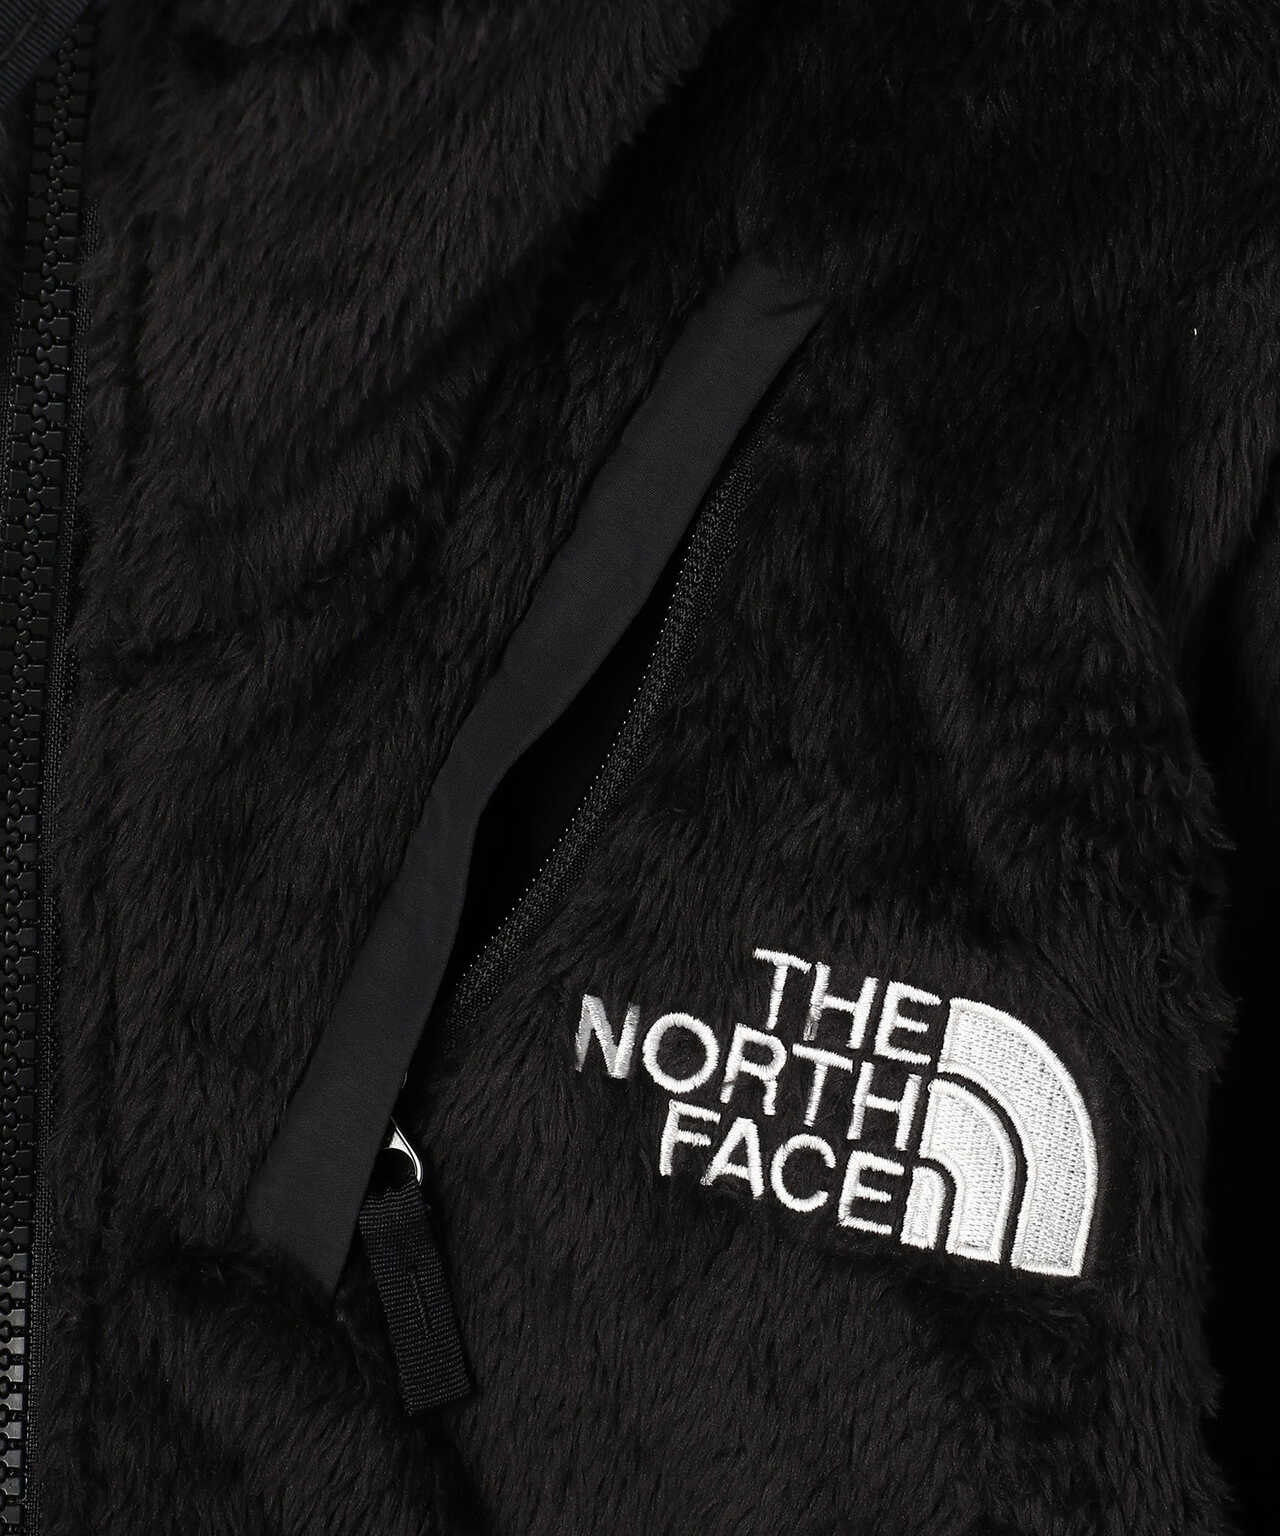 THE NORTH FACE (ザ ノースフェイス) Antarctica Versa Loft Jacket 